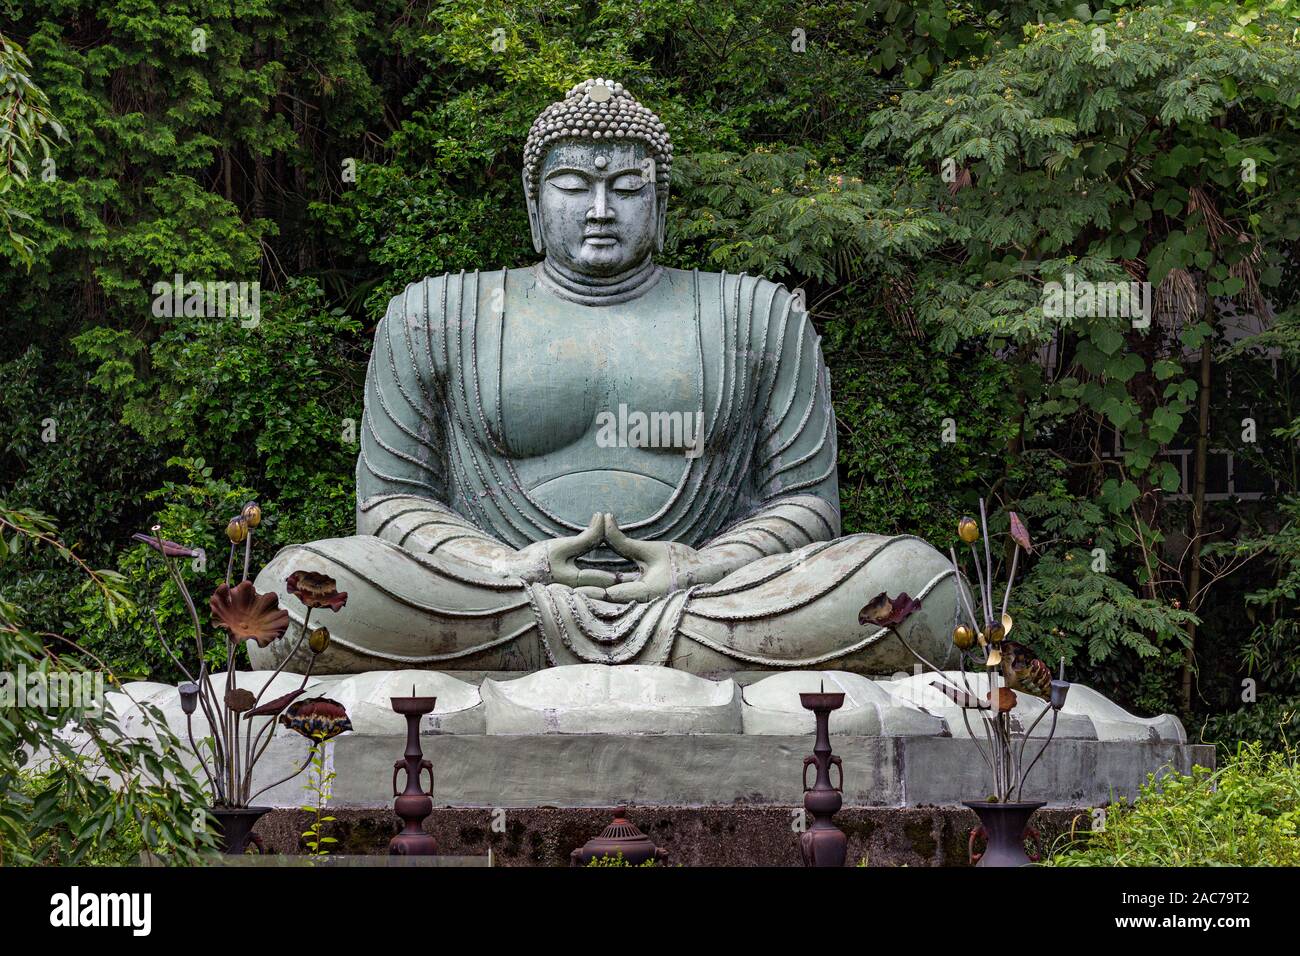 Giant daibutsu figure of the Buddha at Hanibe caves, Komatsu, Ishikawa Prefecture, Japan. Stock Photo